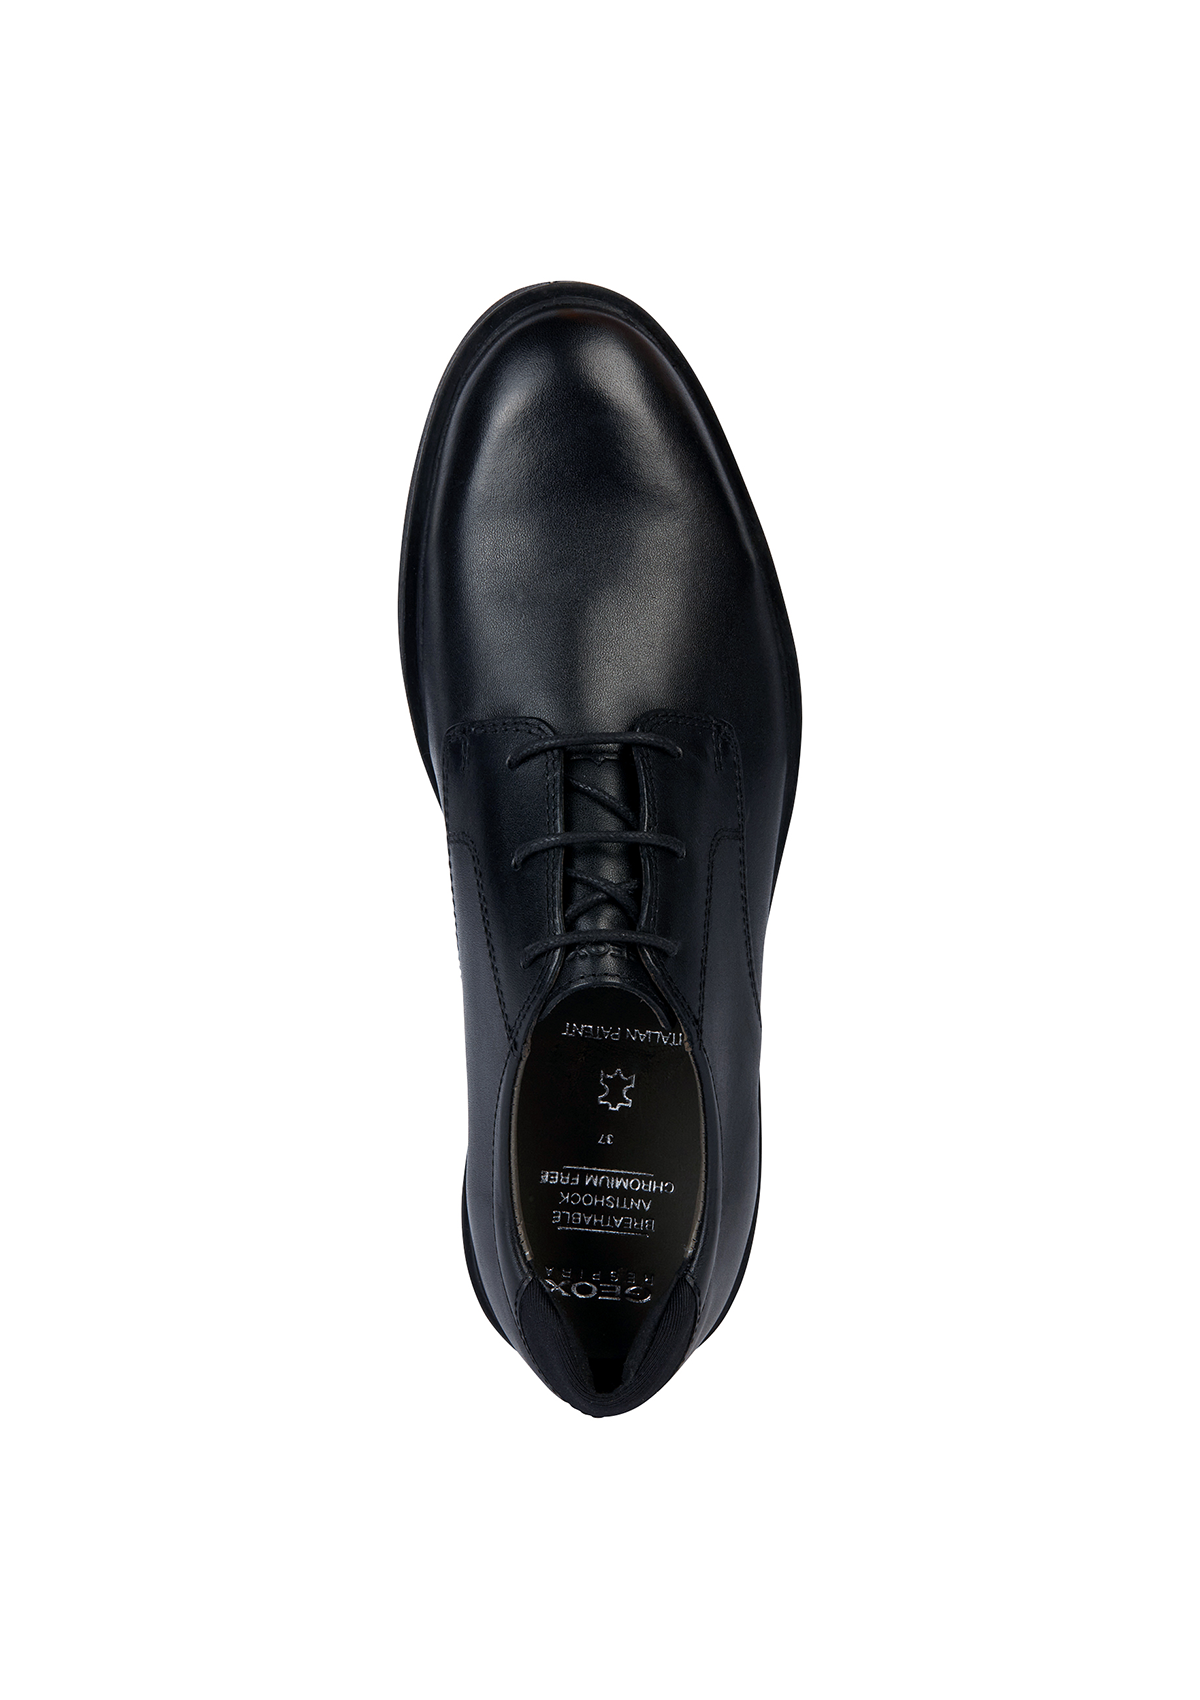 Geox Boys School Shoes ZHEENO Laced Black